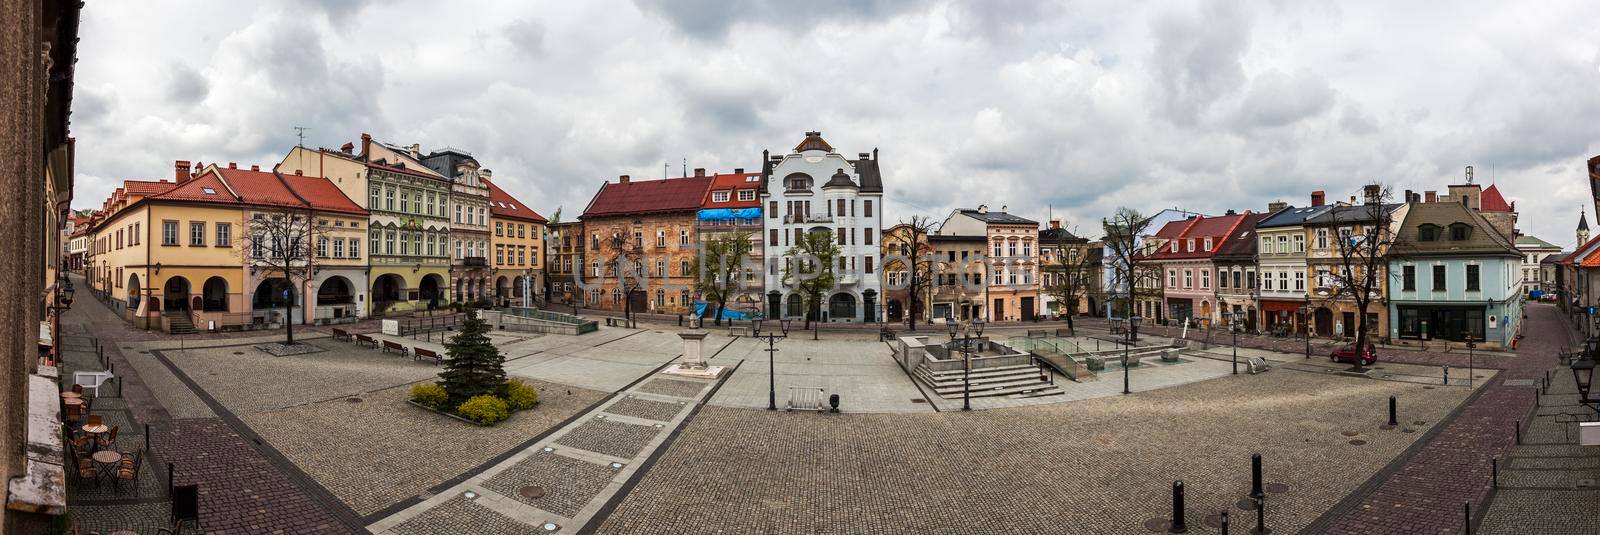 Main Square in Bielsko-Biala. Bielsko-Biala, Silesia, Poland.